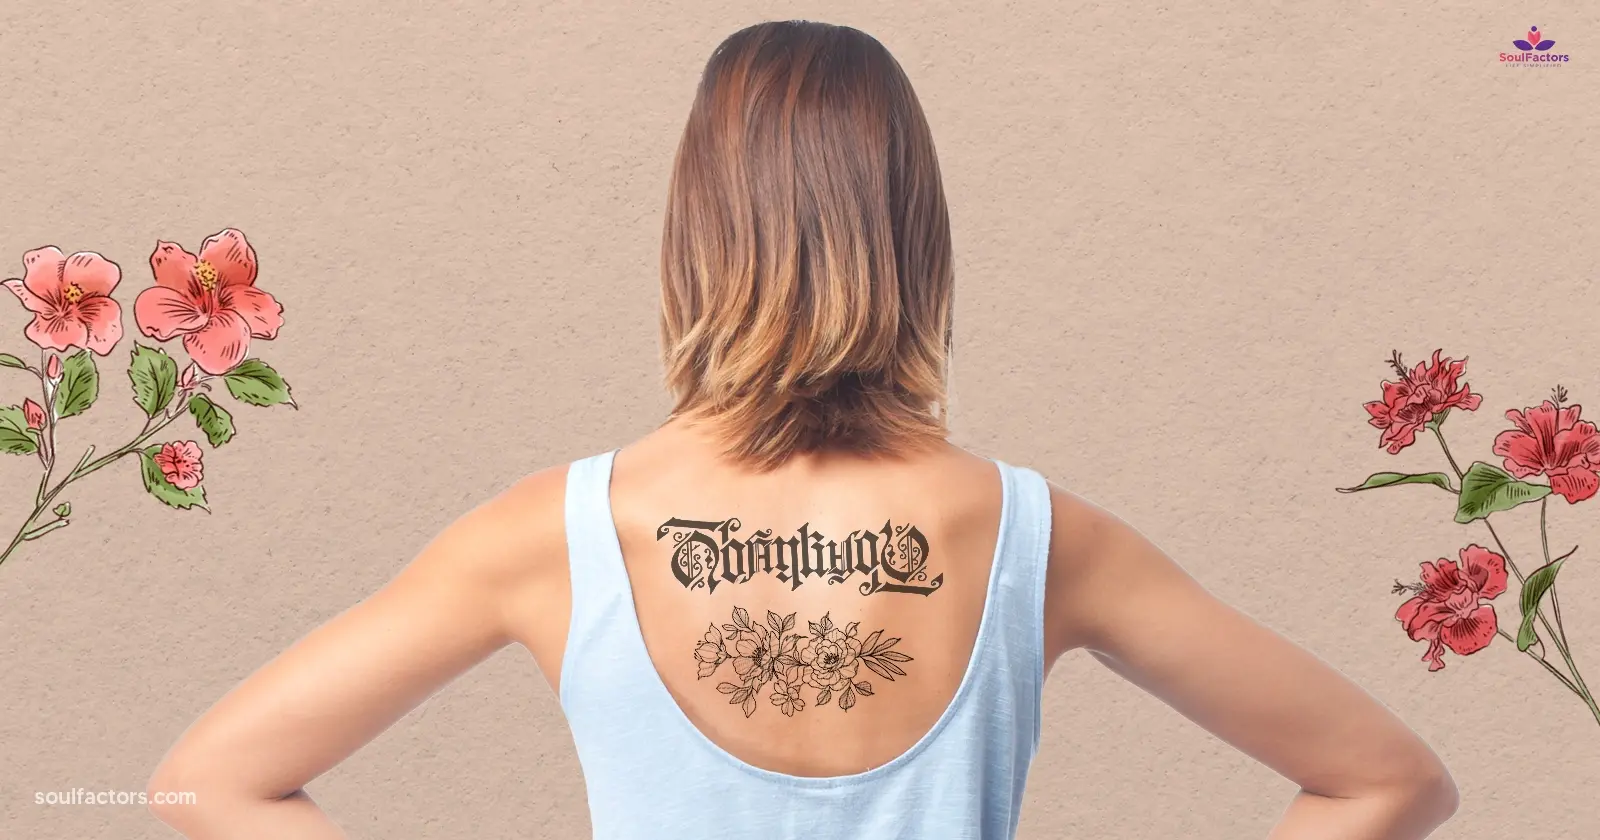 20 Best Trending Ambigram Tattoo Ideas - Feature